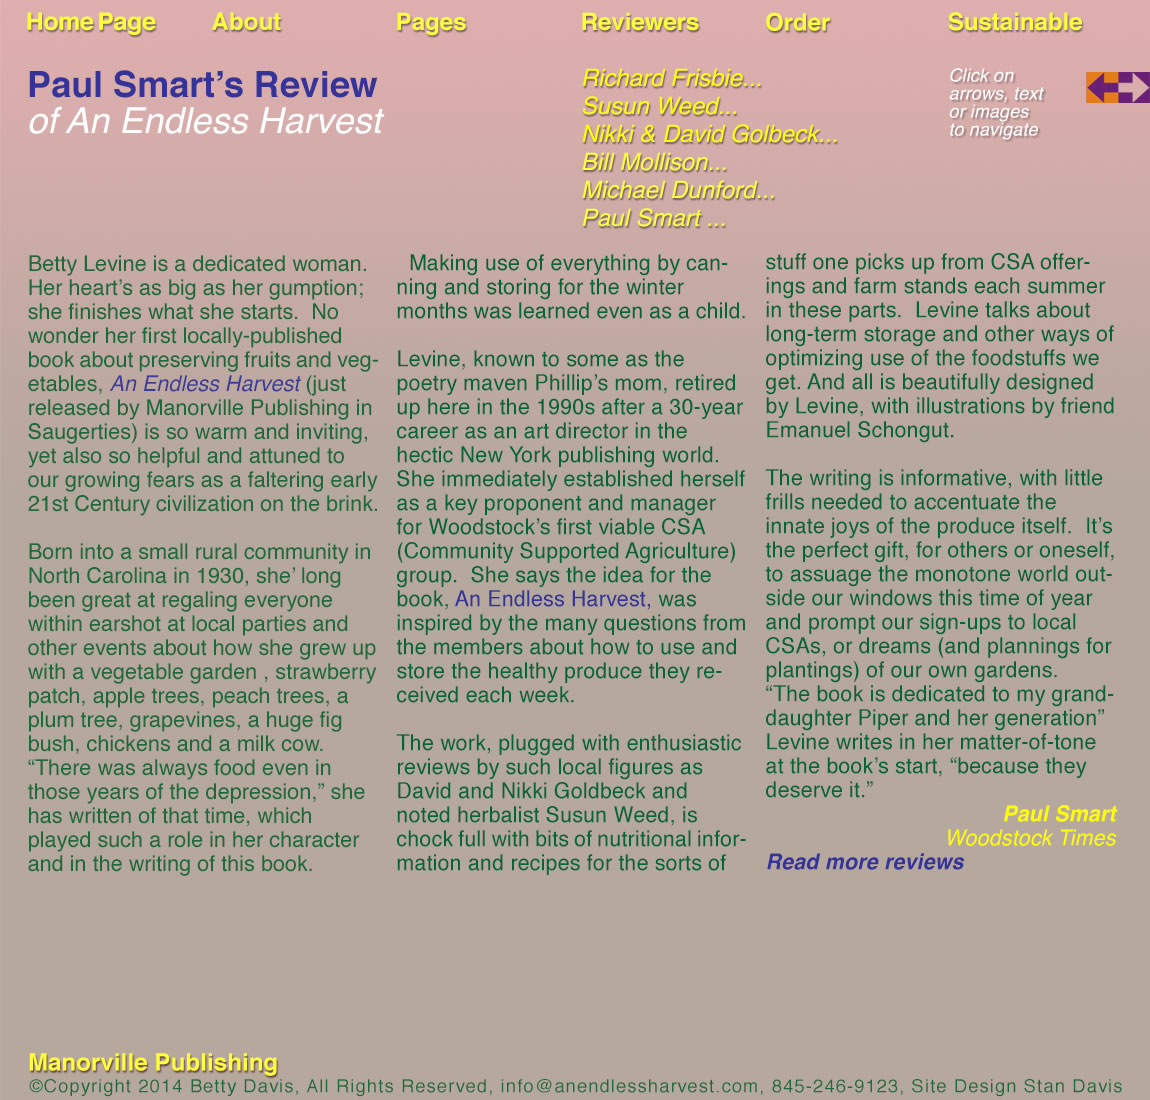 Paul Smart's Review